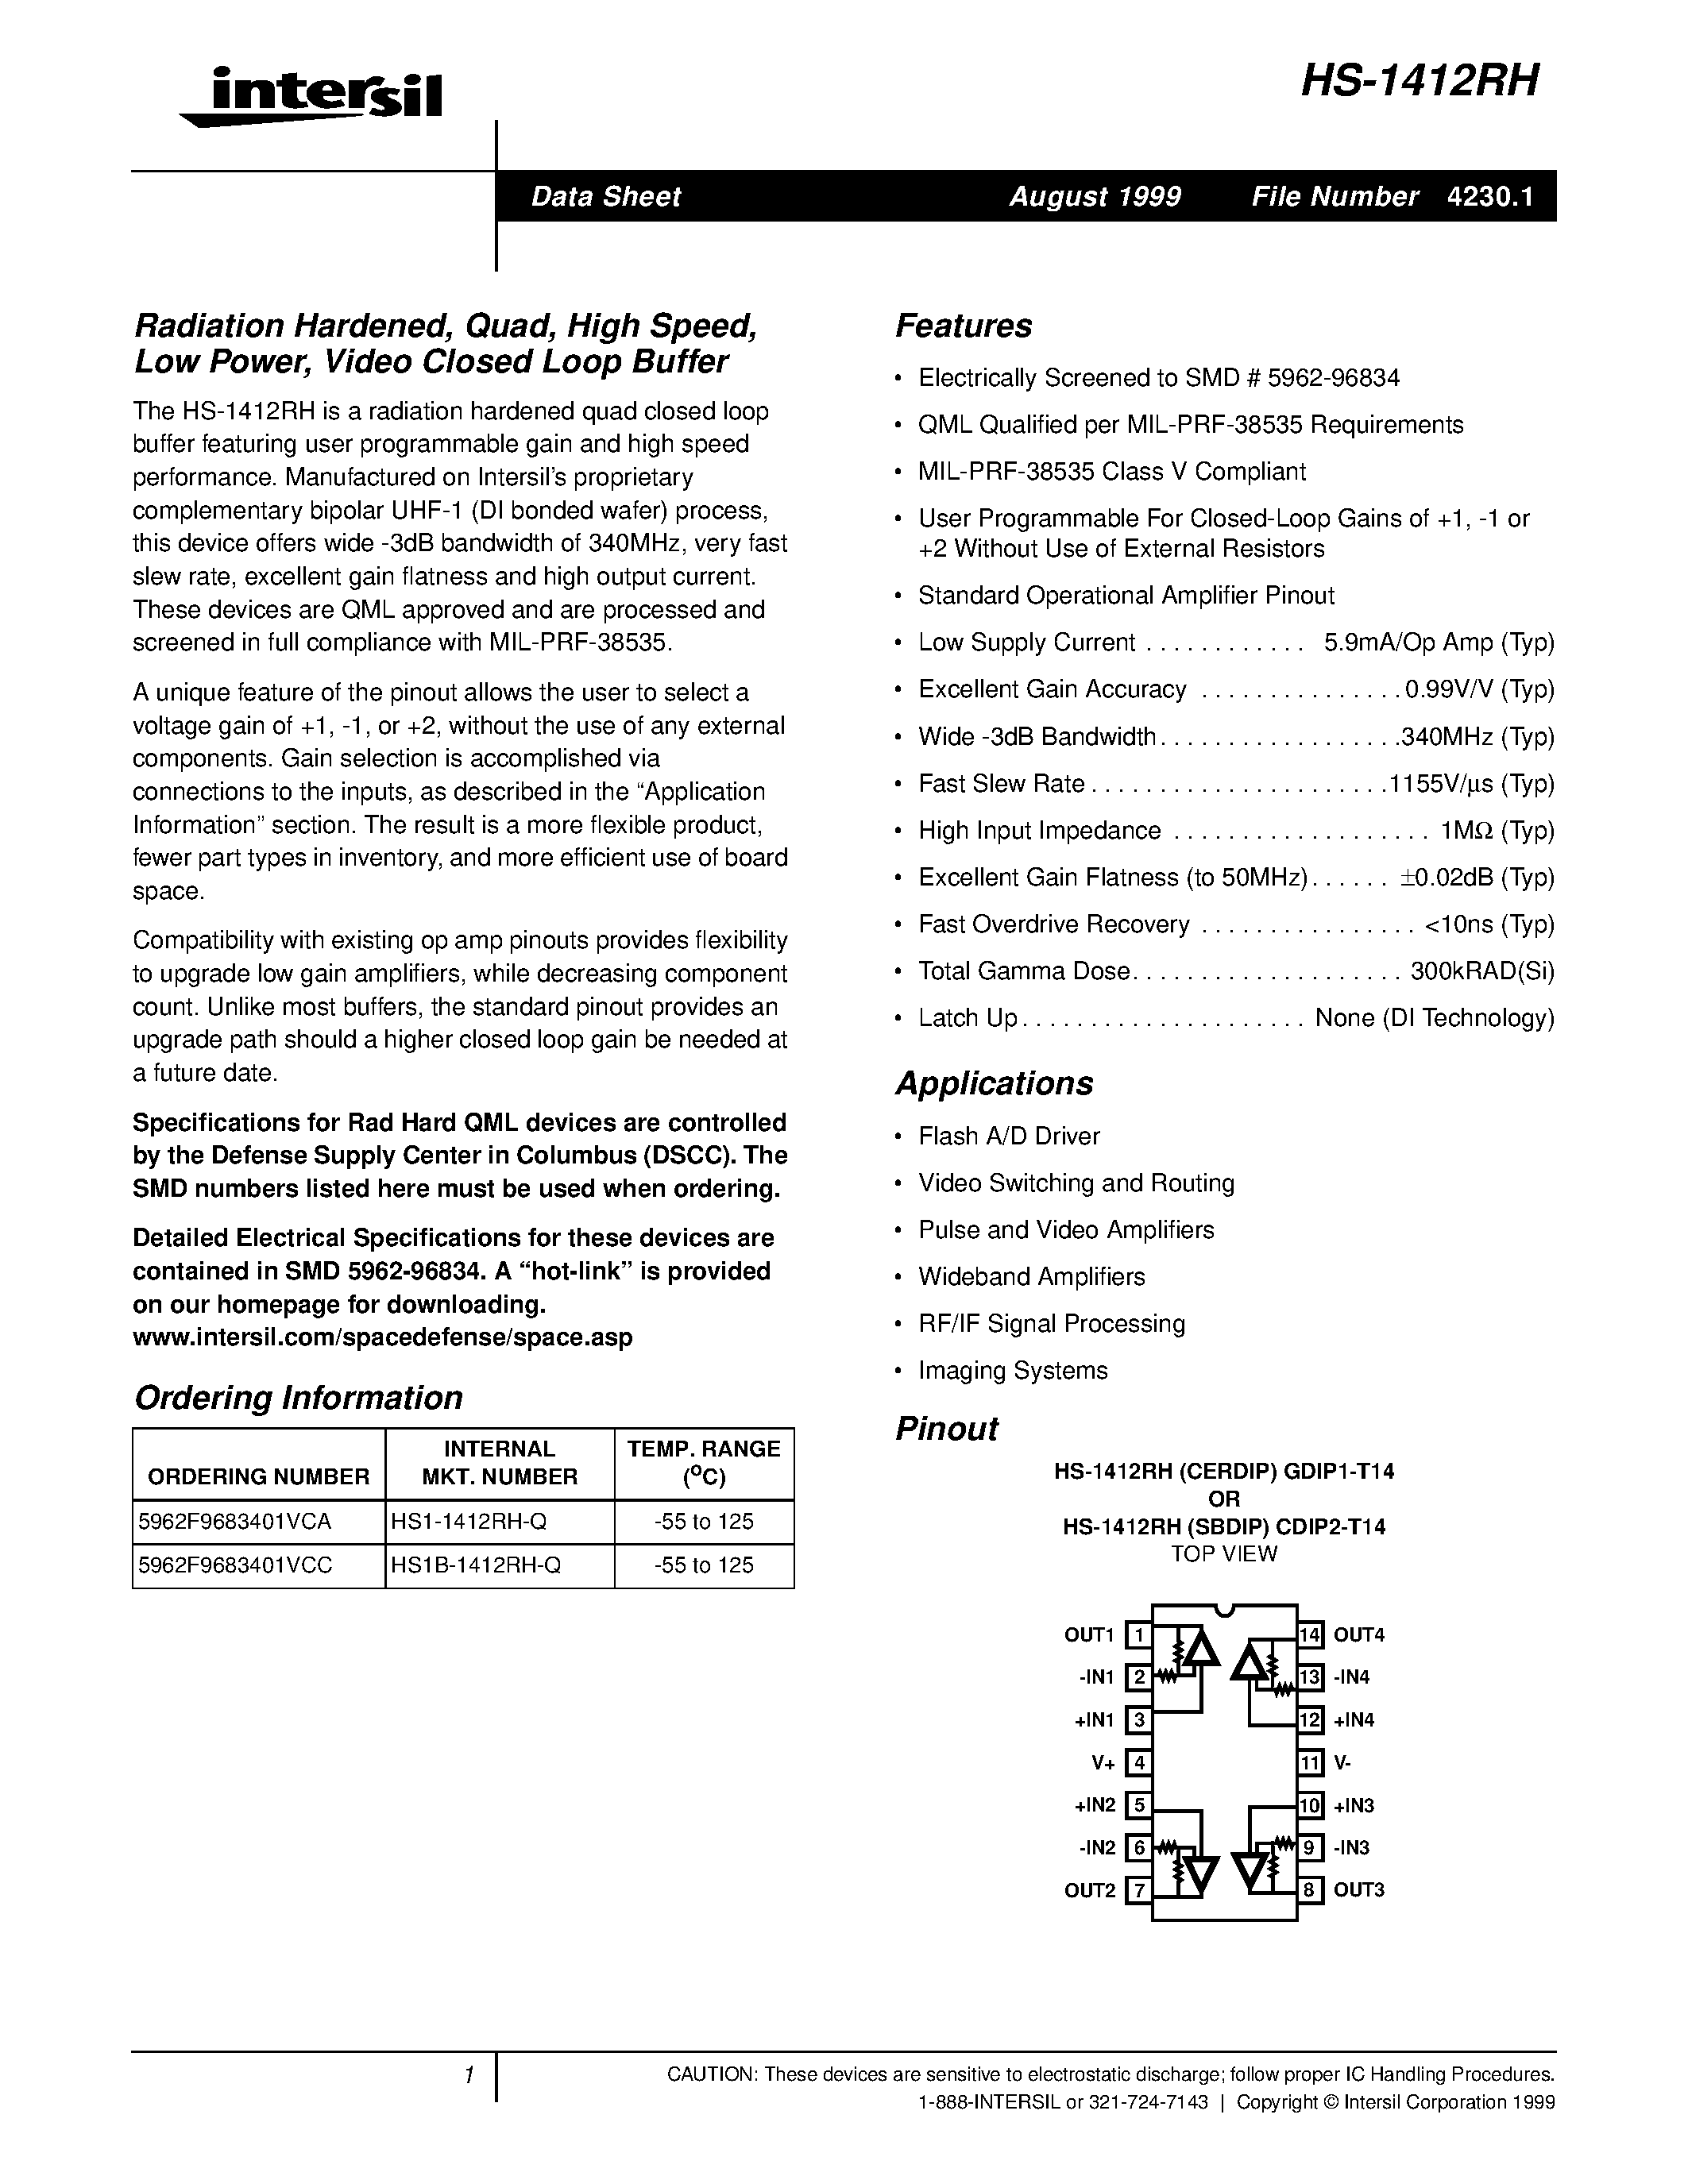 Даташит HS1-1412RH-Q-Radiation Hardened/ Quad/ High Speed/ Low Power/ Video Closed Loop Buffer страница 1